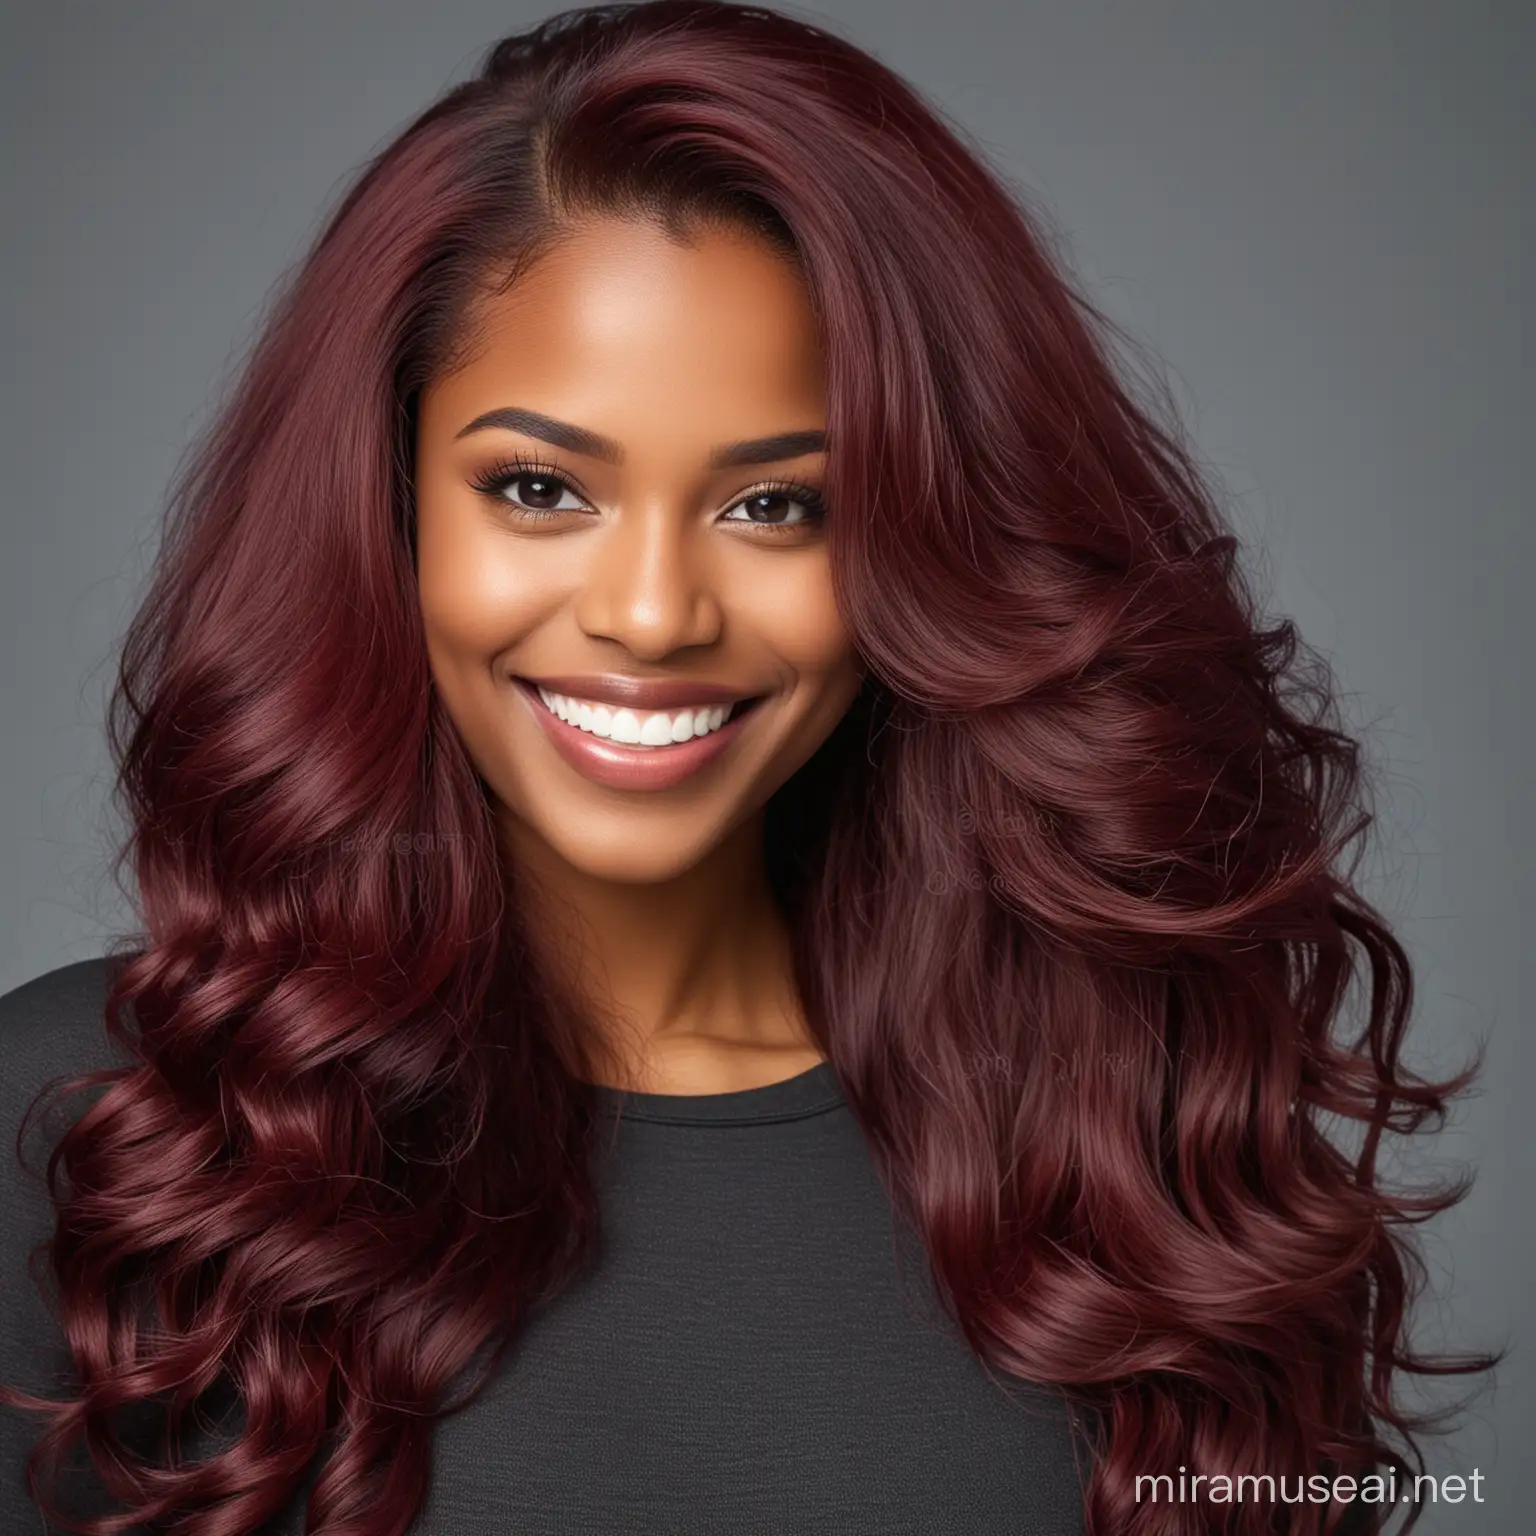 professional black girl smile luxury long  burgundy hair stock image